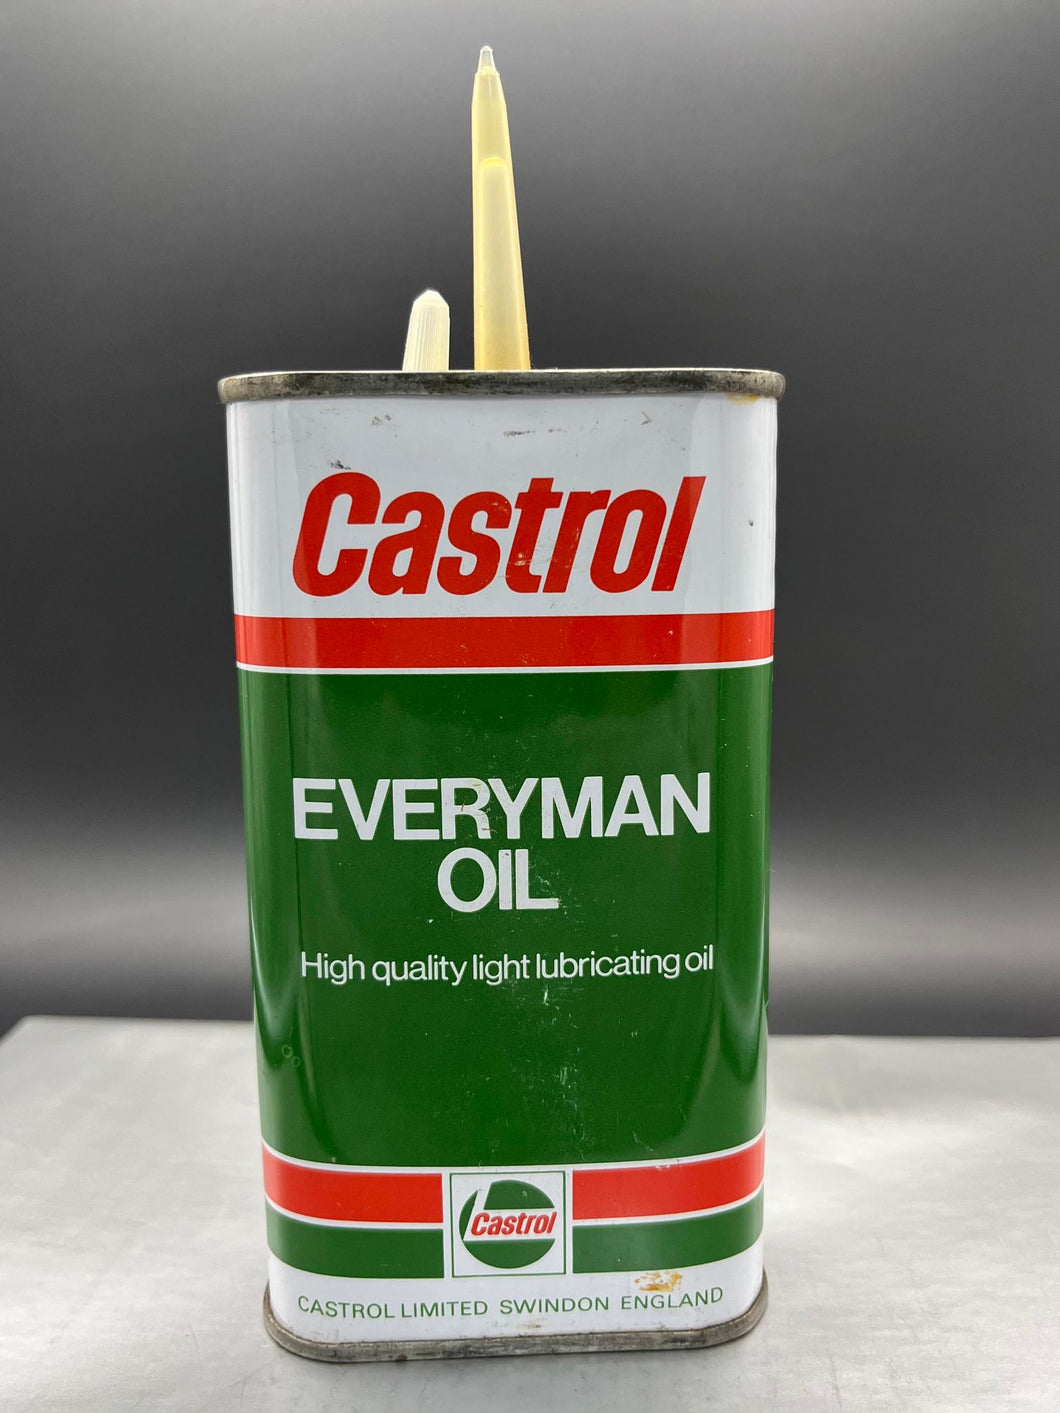 New Old Stock Castrol Everyman Oil Tin - Full